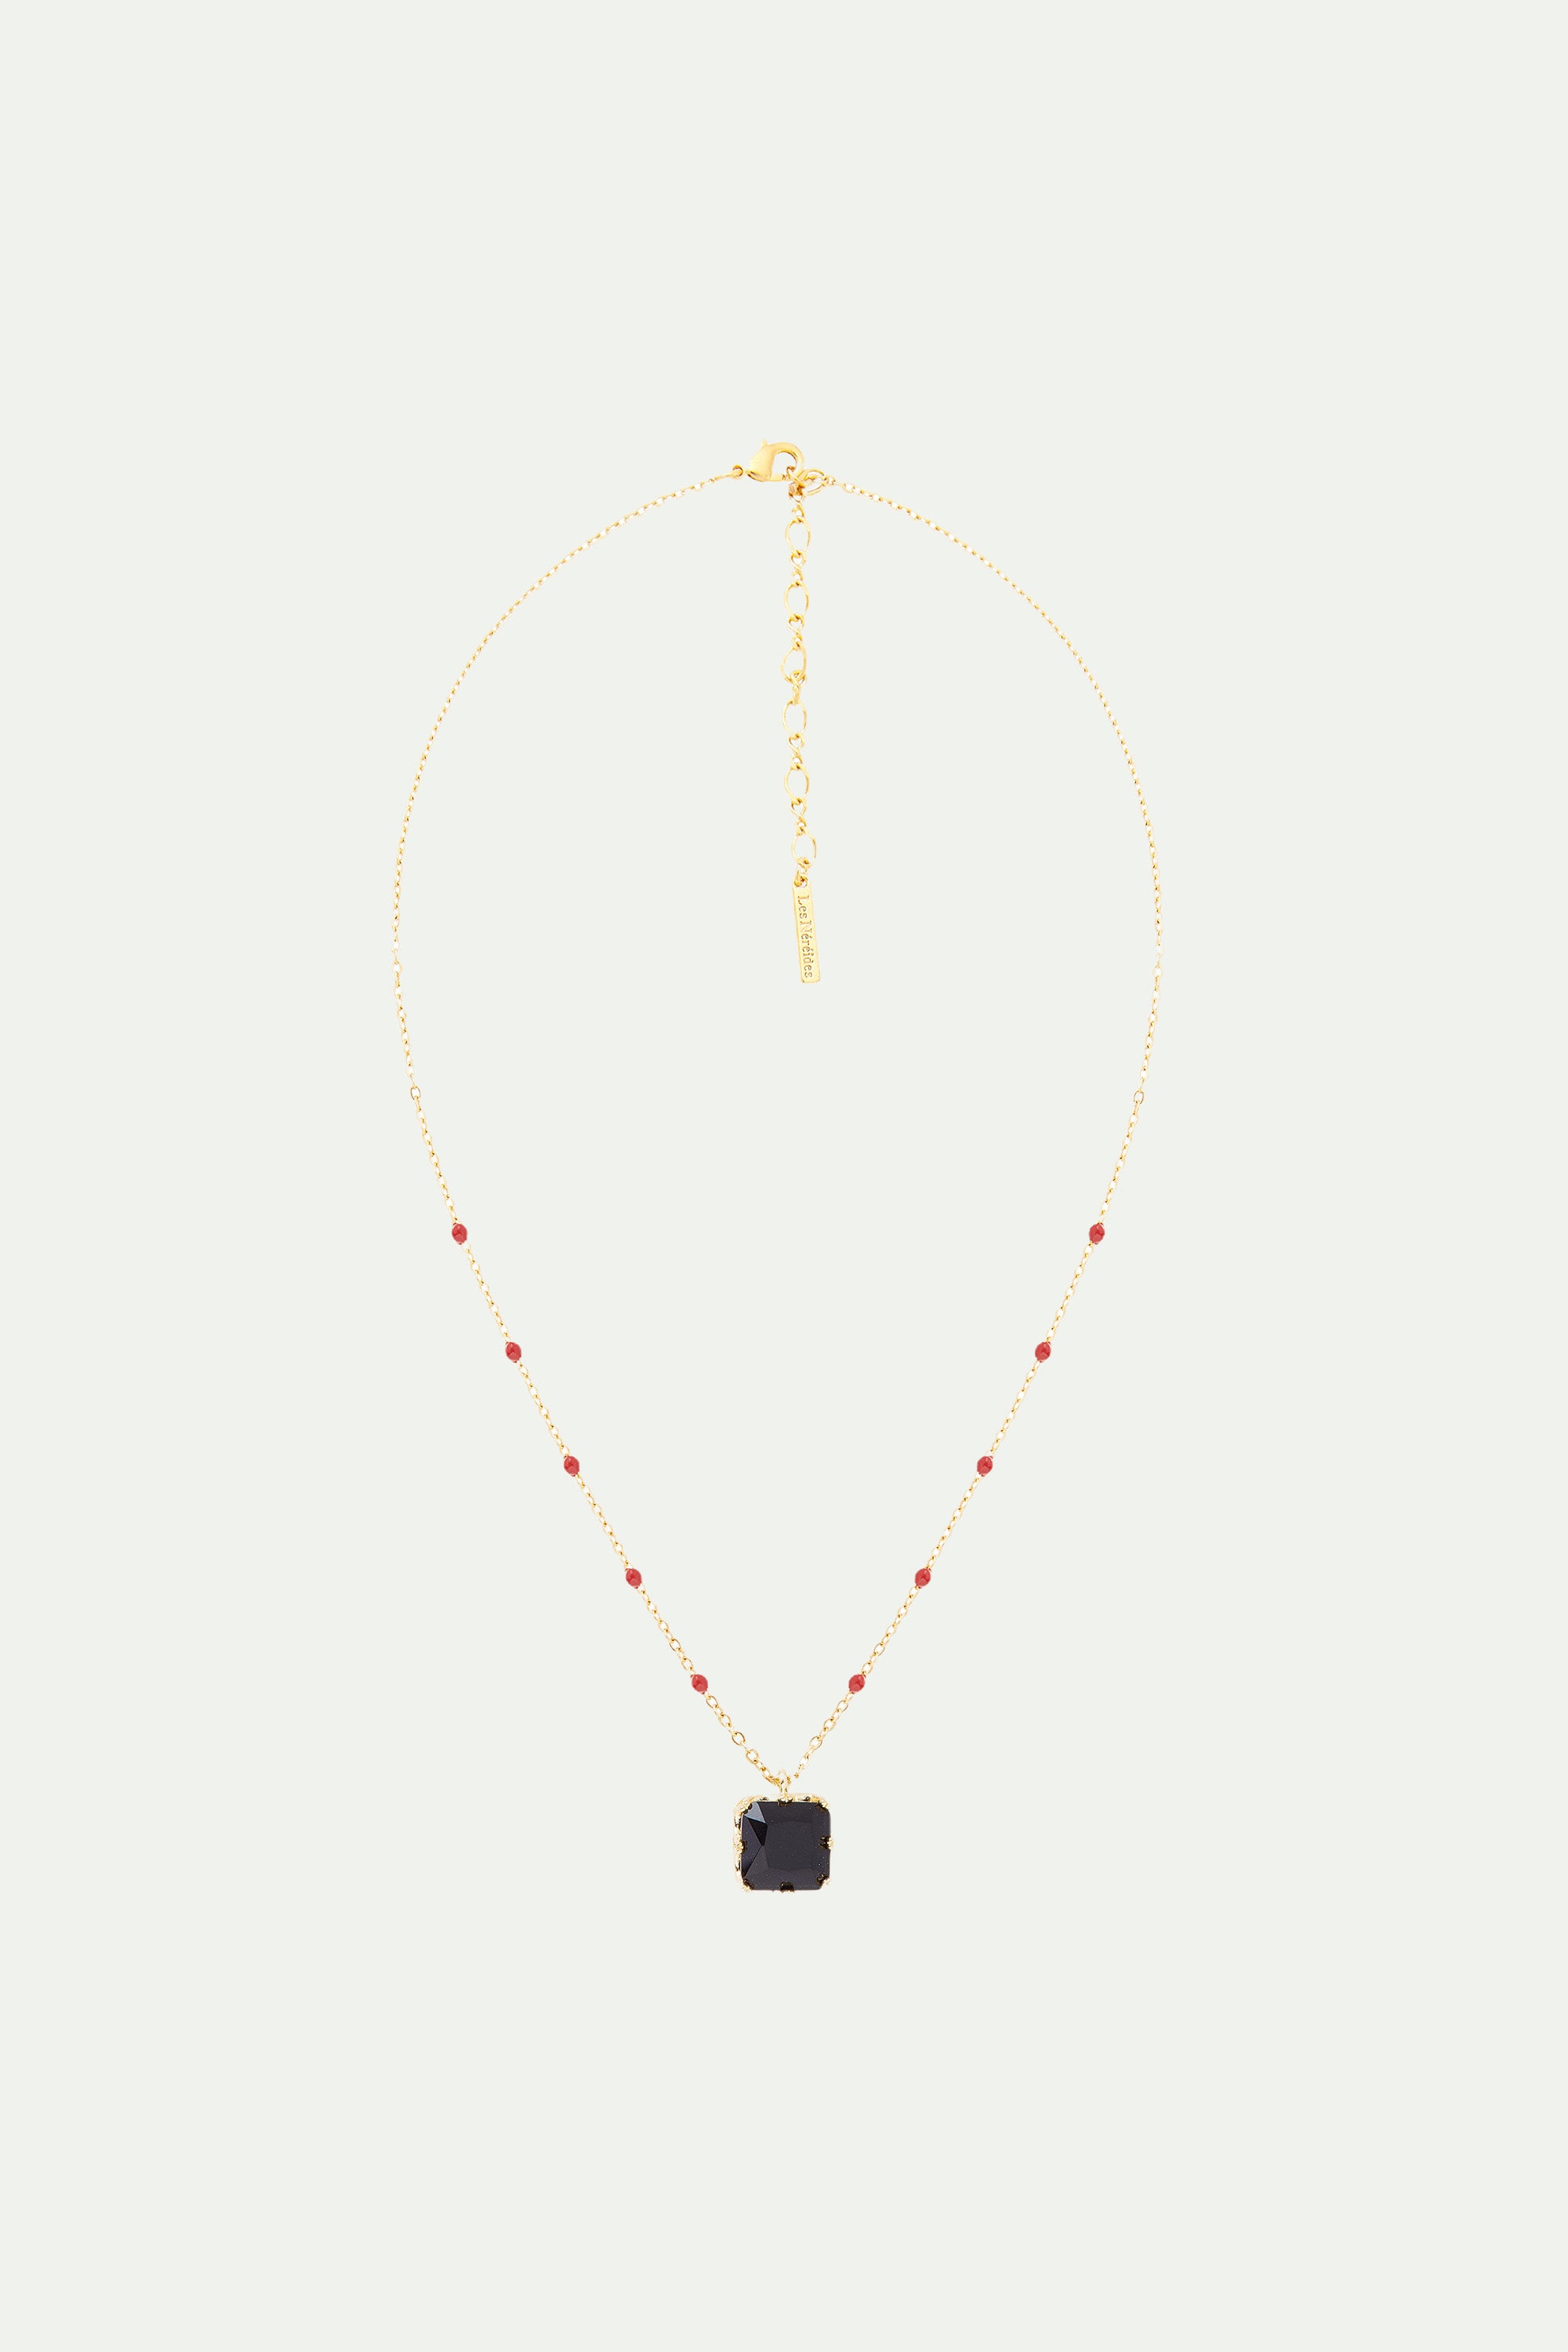 Black square stone pendant necklace